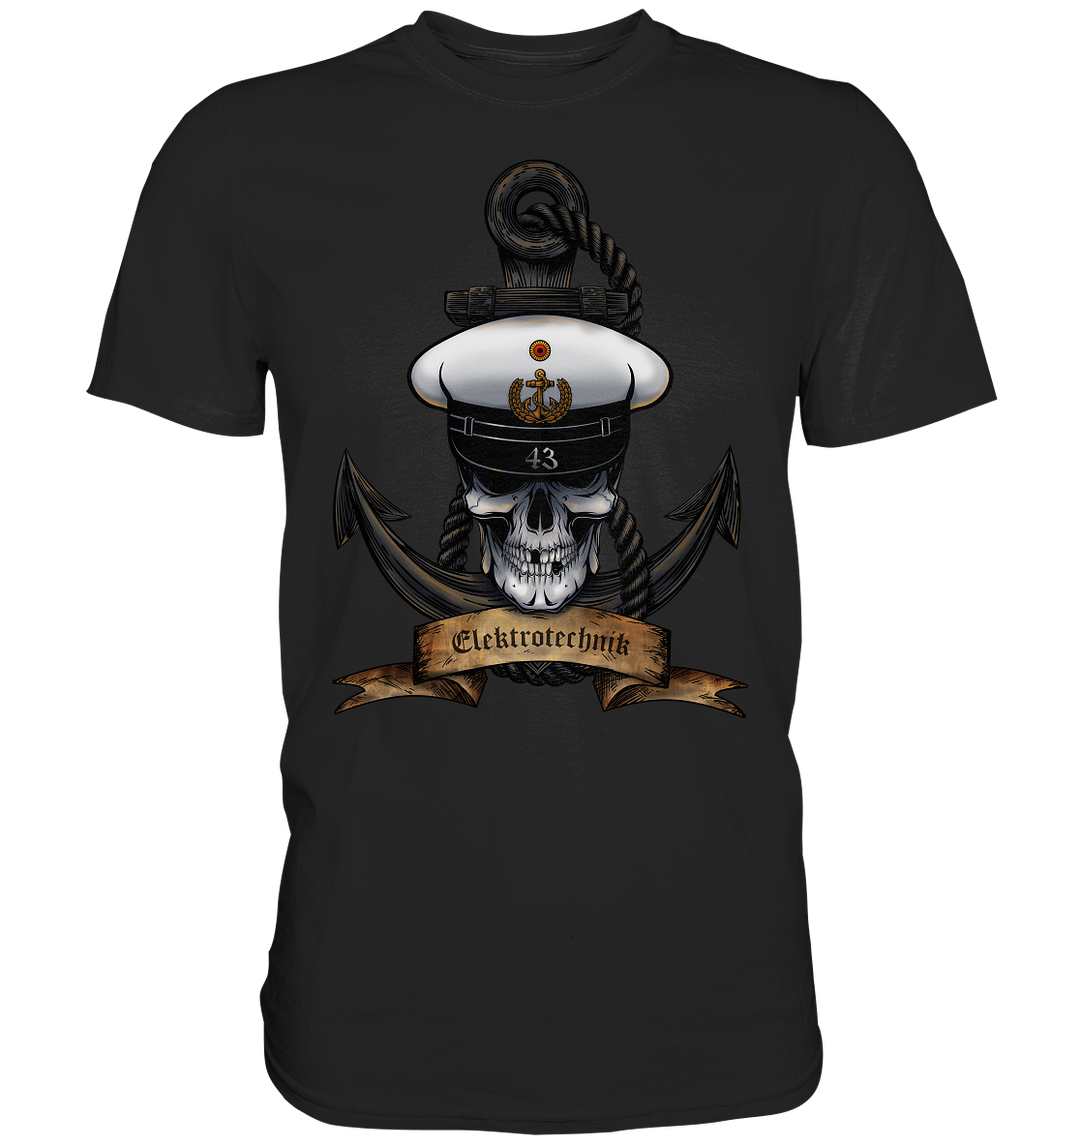 "Marine 43 - Elektrotechnik" - Premium Shirt